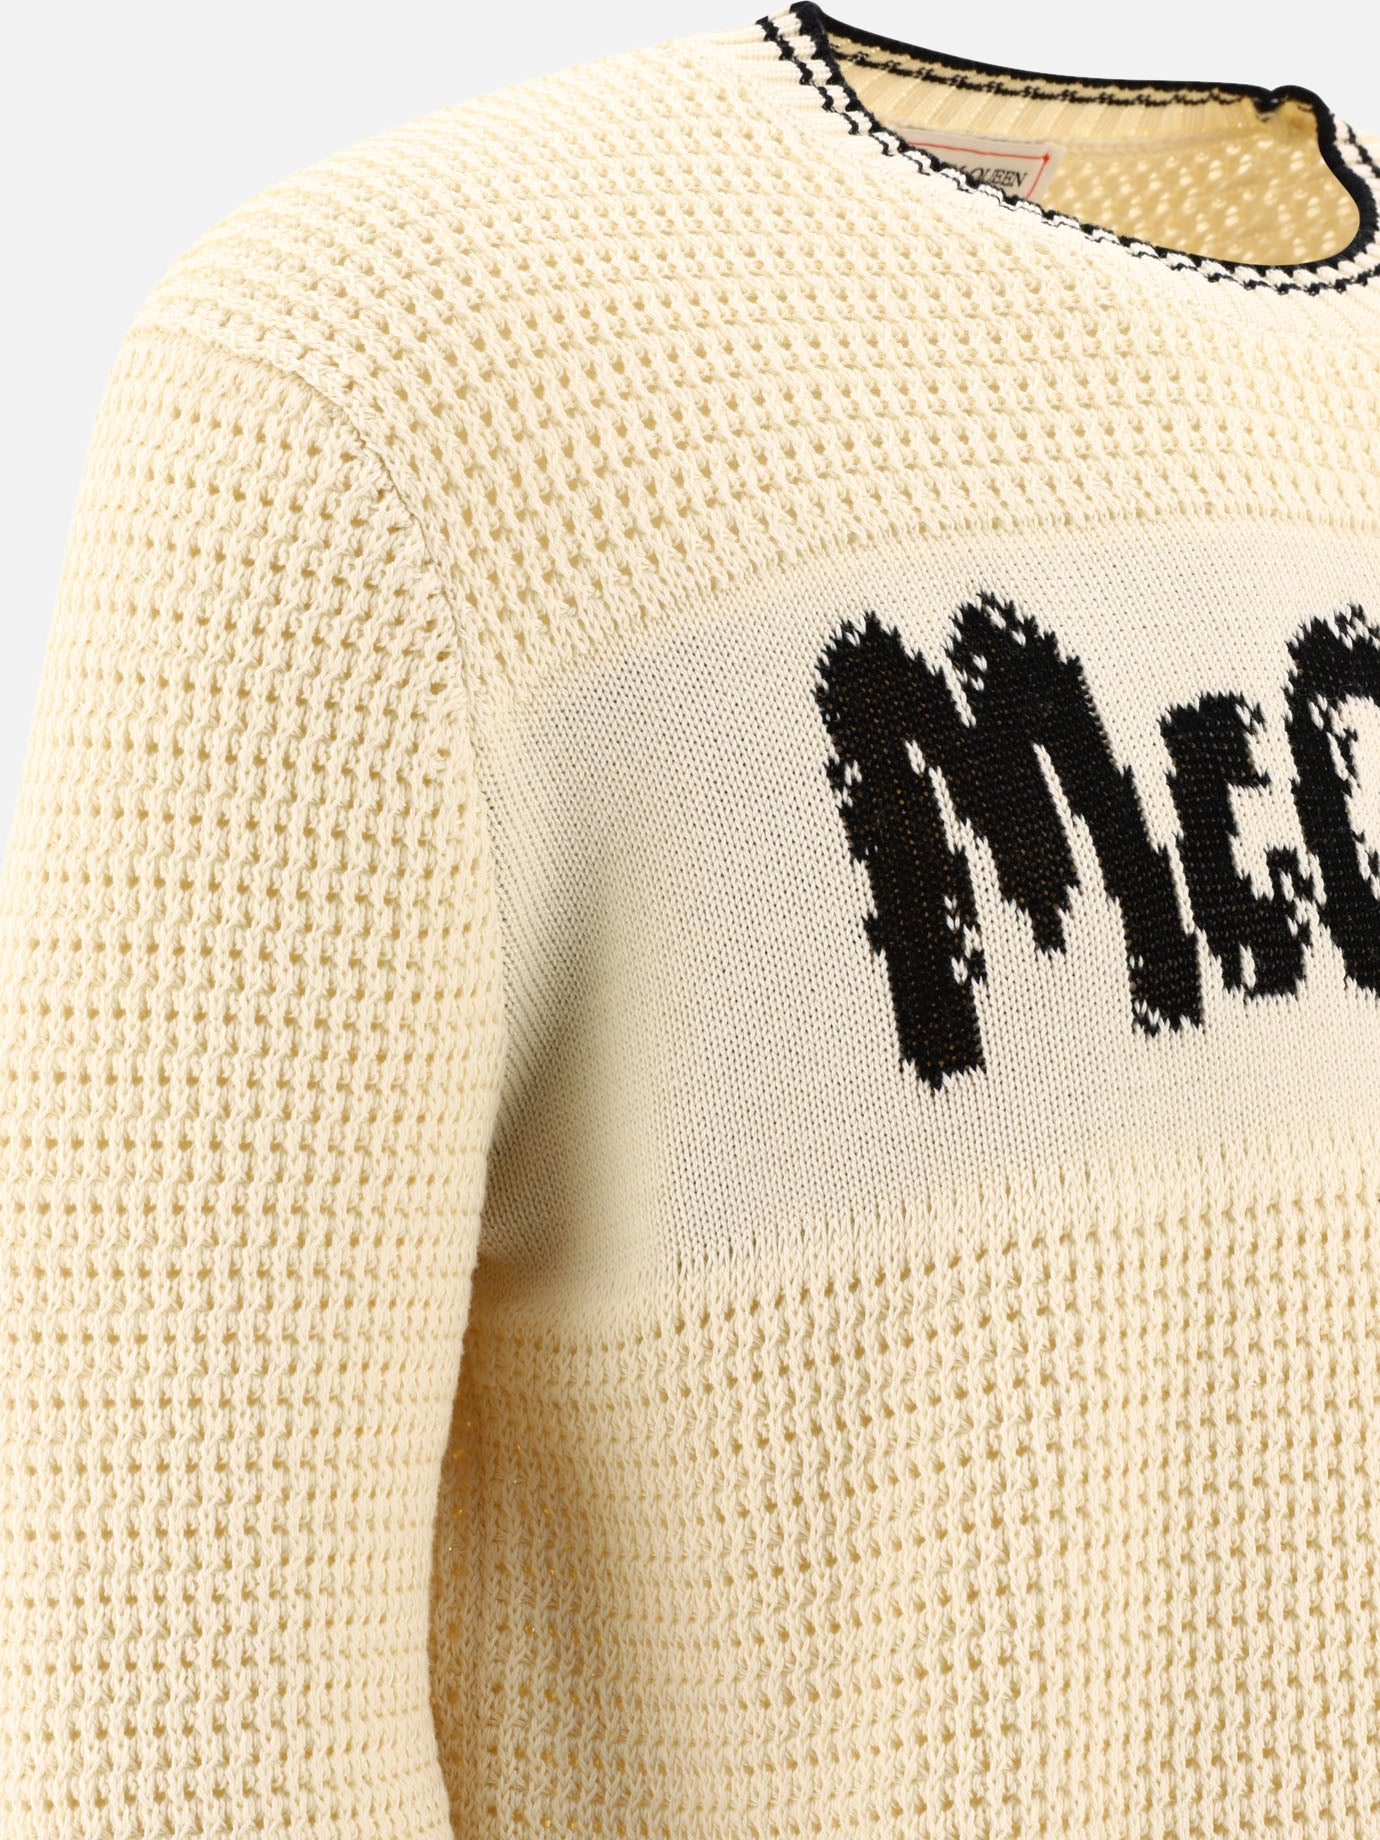 "McQueen Graffiti" sweater